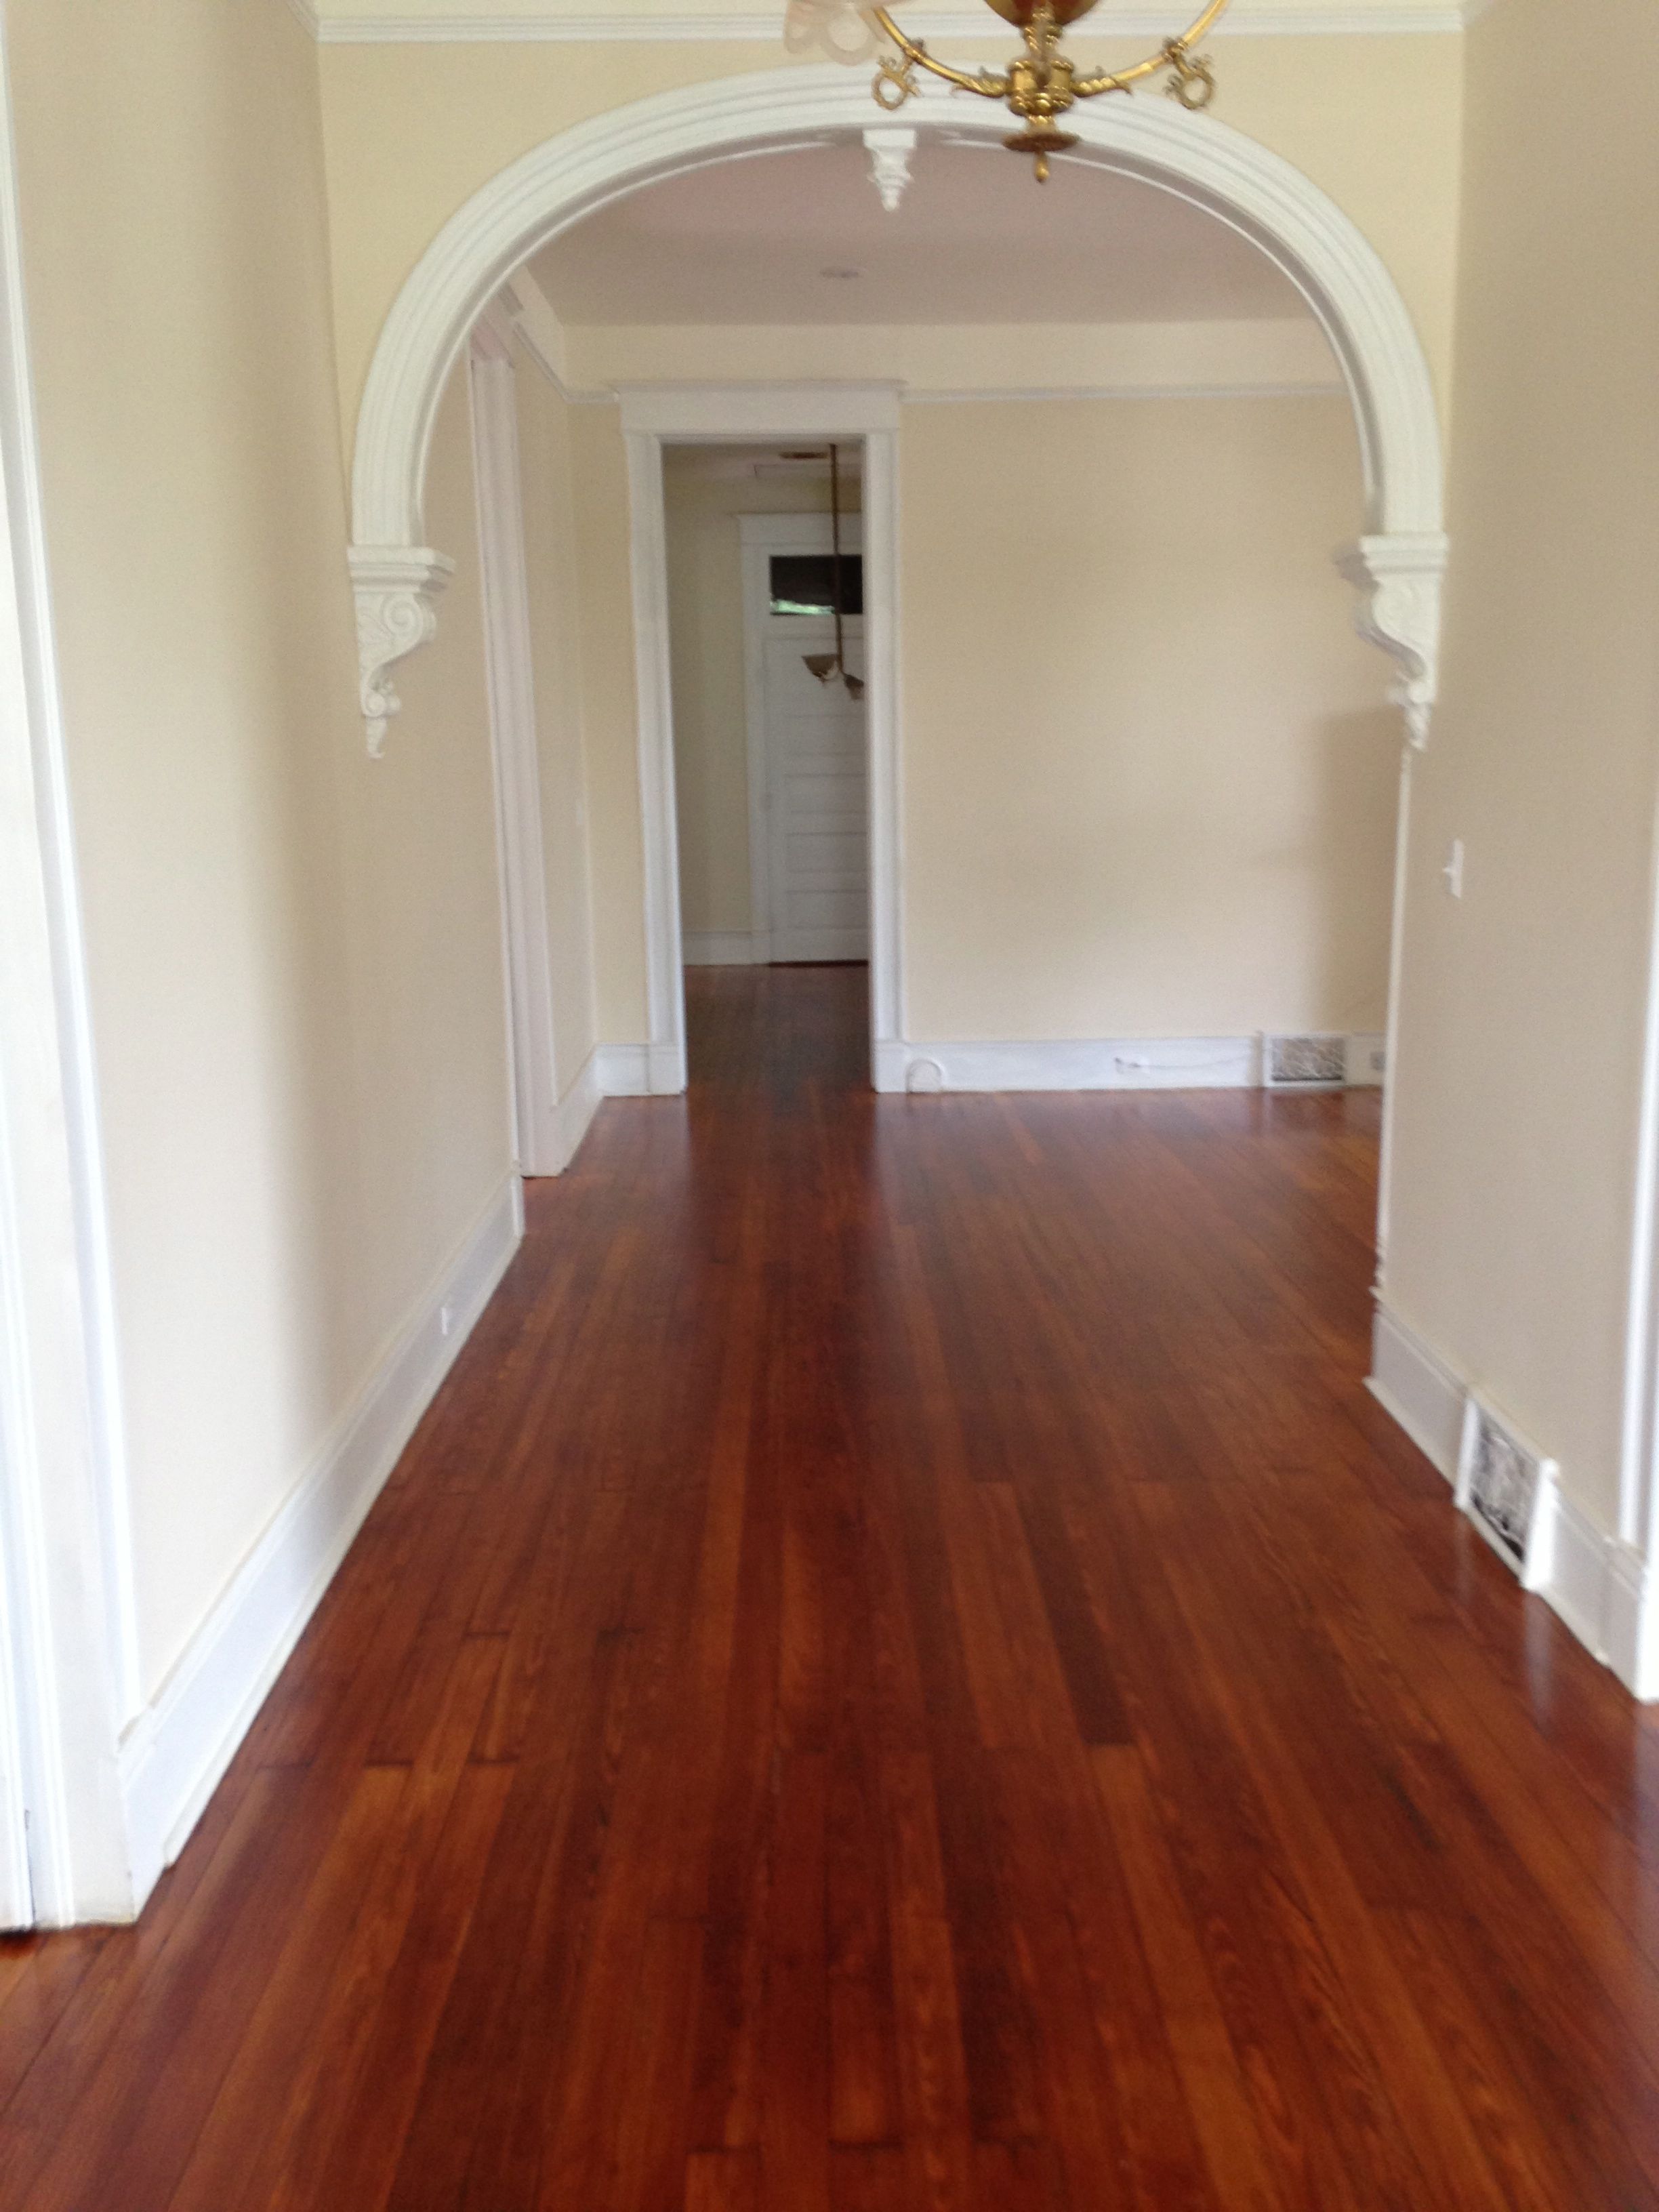 Polyurethaned hardwood floors in an arched hallway